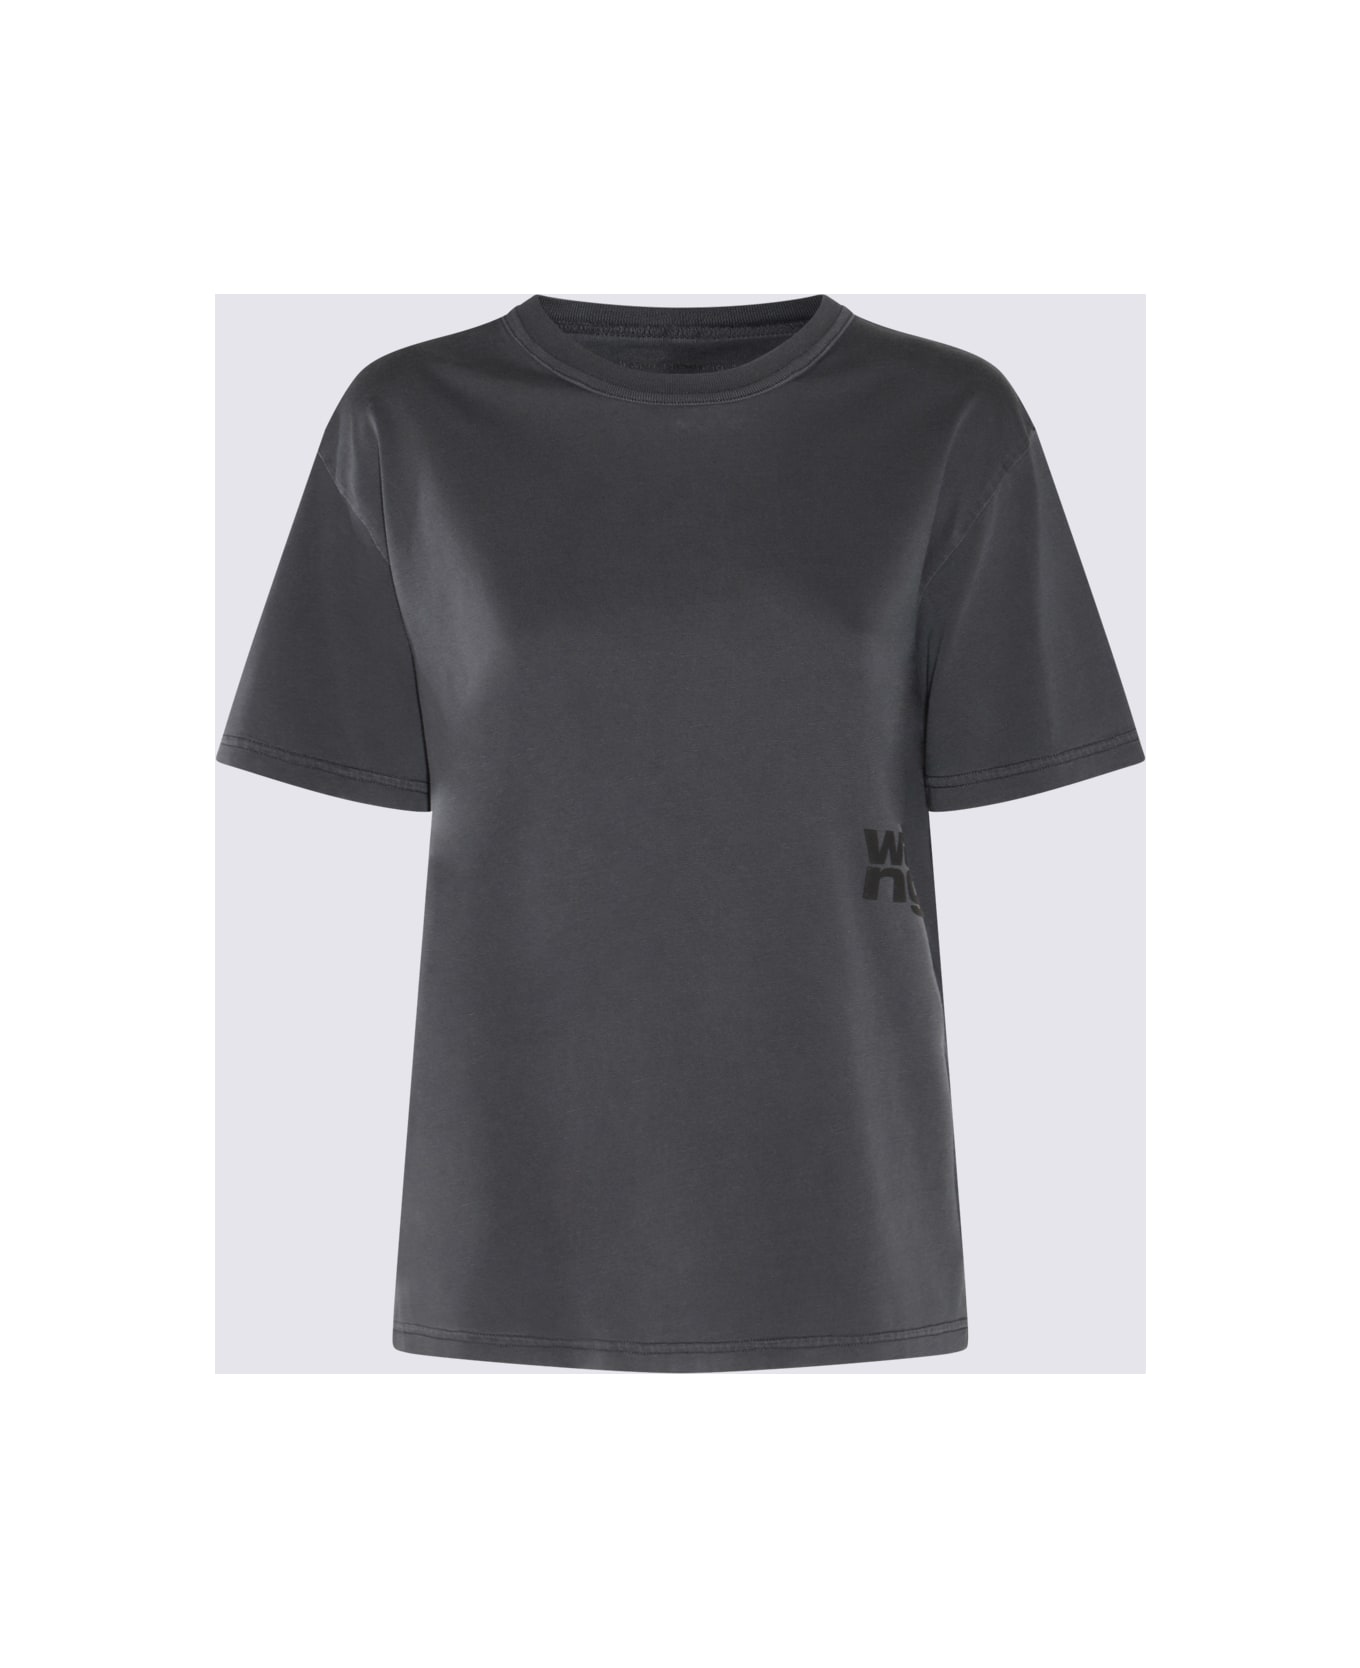 Alexander Wang Dark Grey Cotton T-shirt - SOFT OBSIDIAN Tシャツ